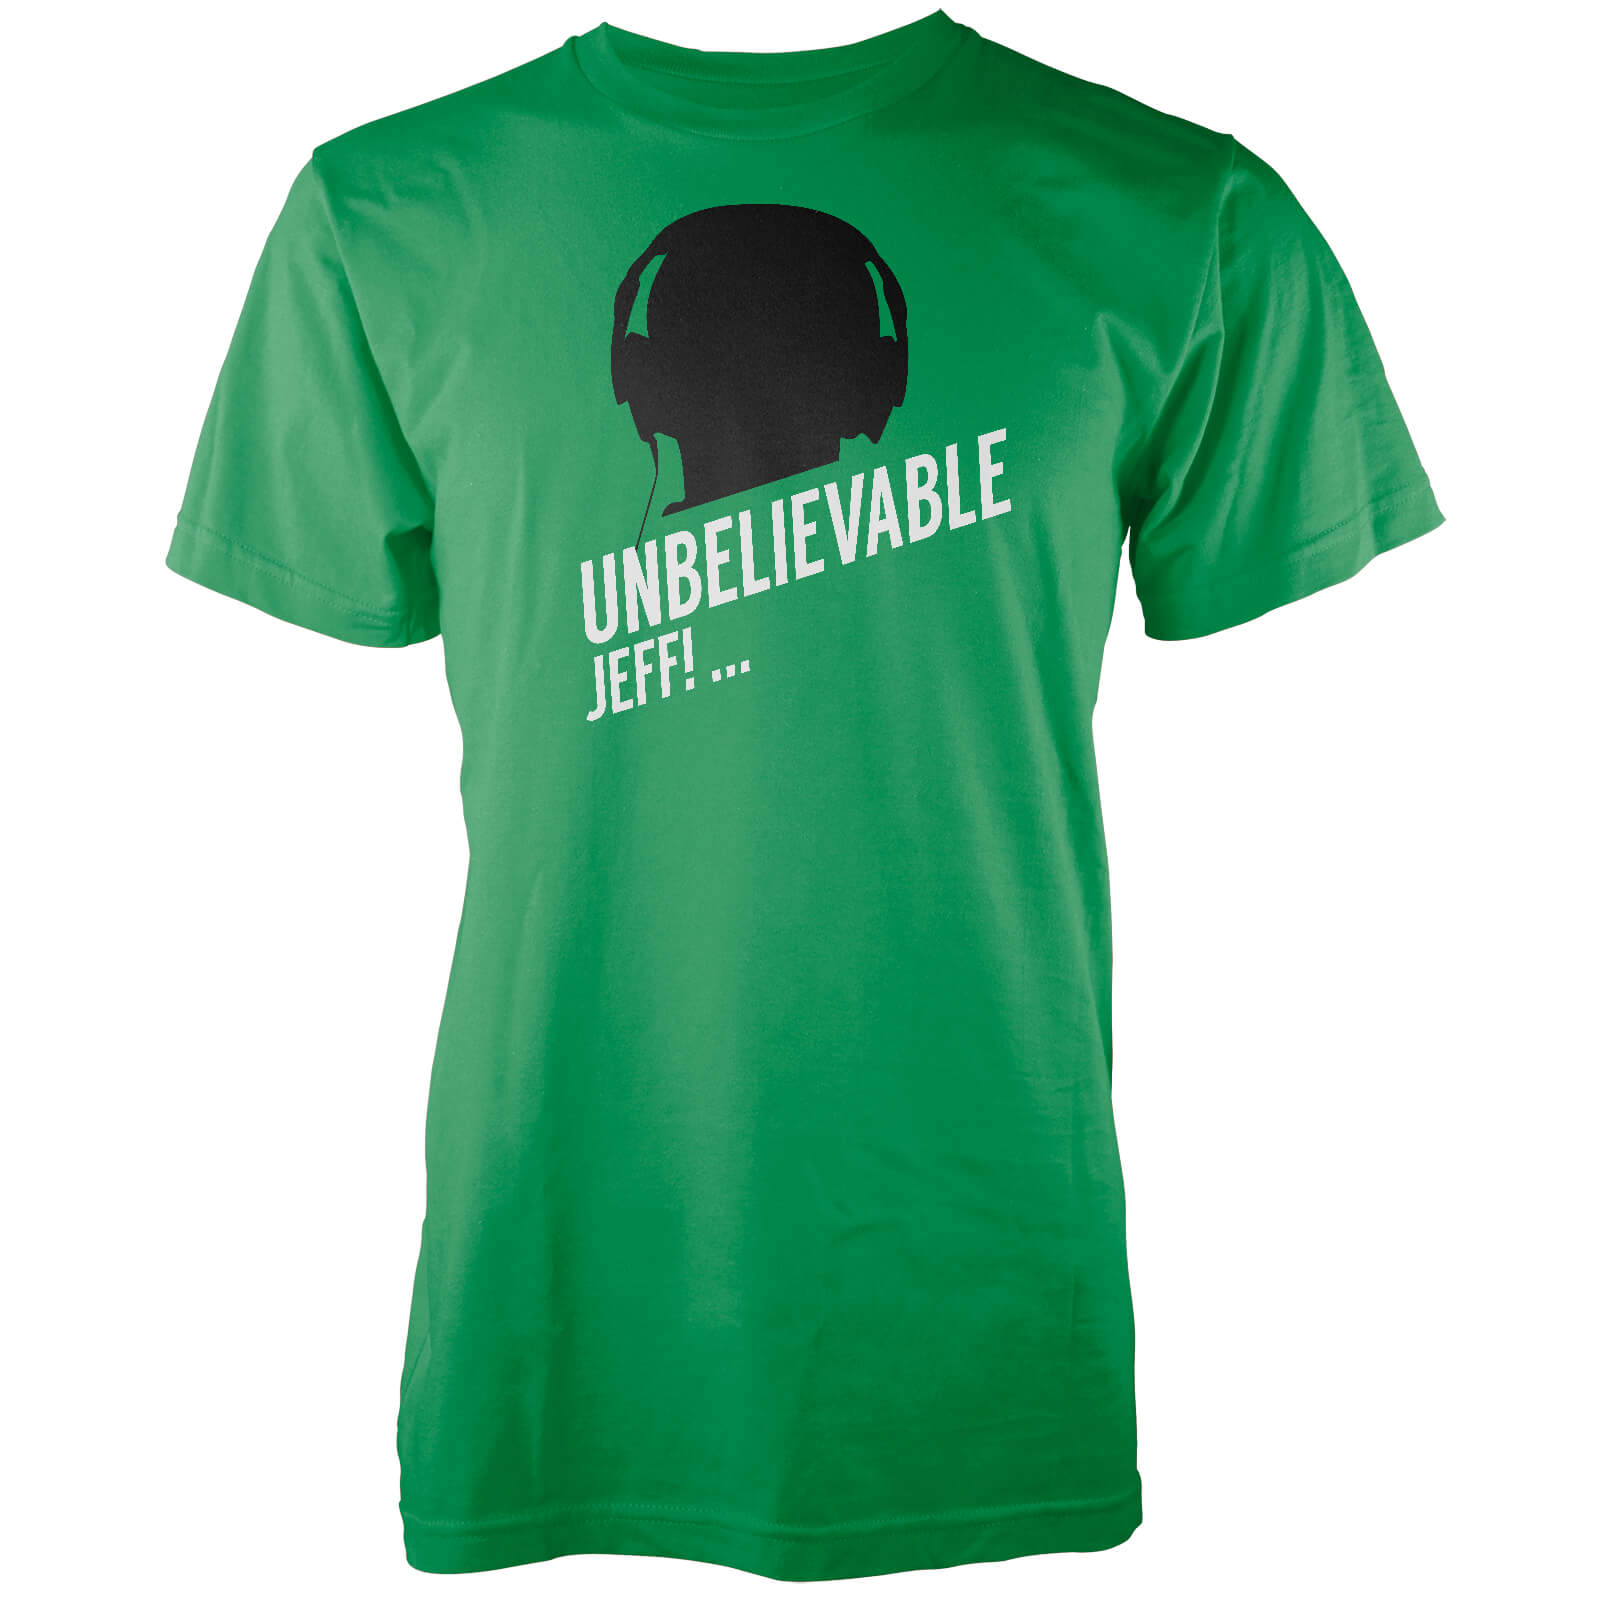 Unbelievable Jeff Men's Green T-Shirt - S - Green